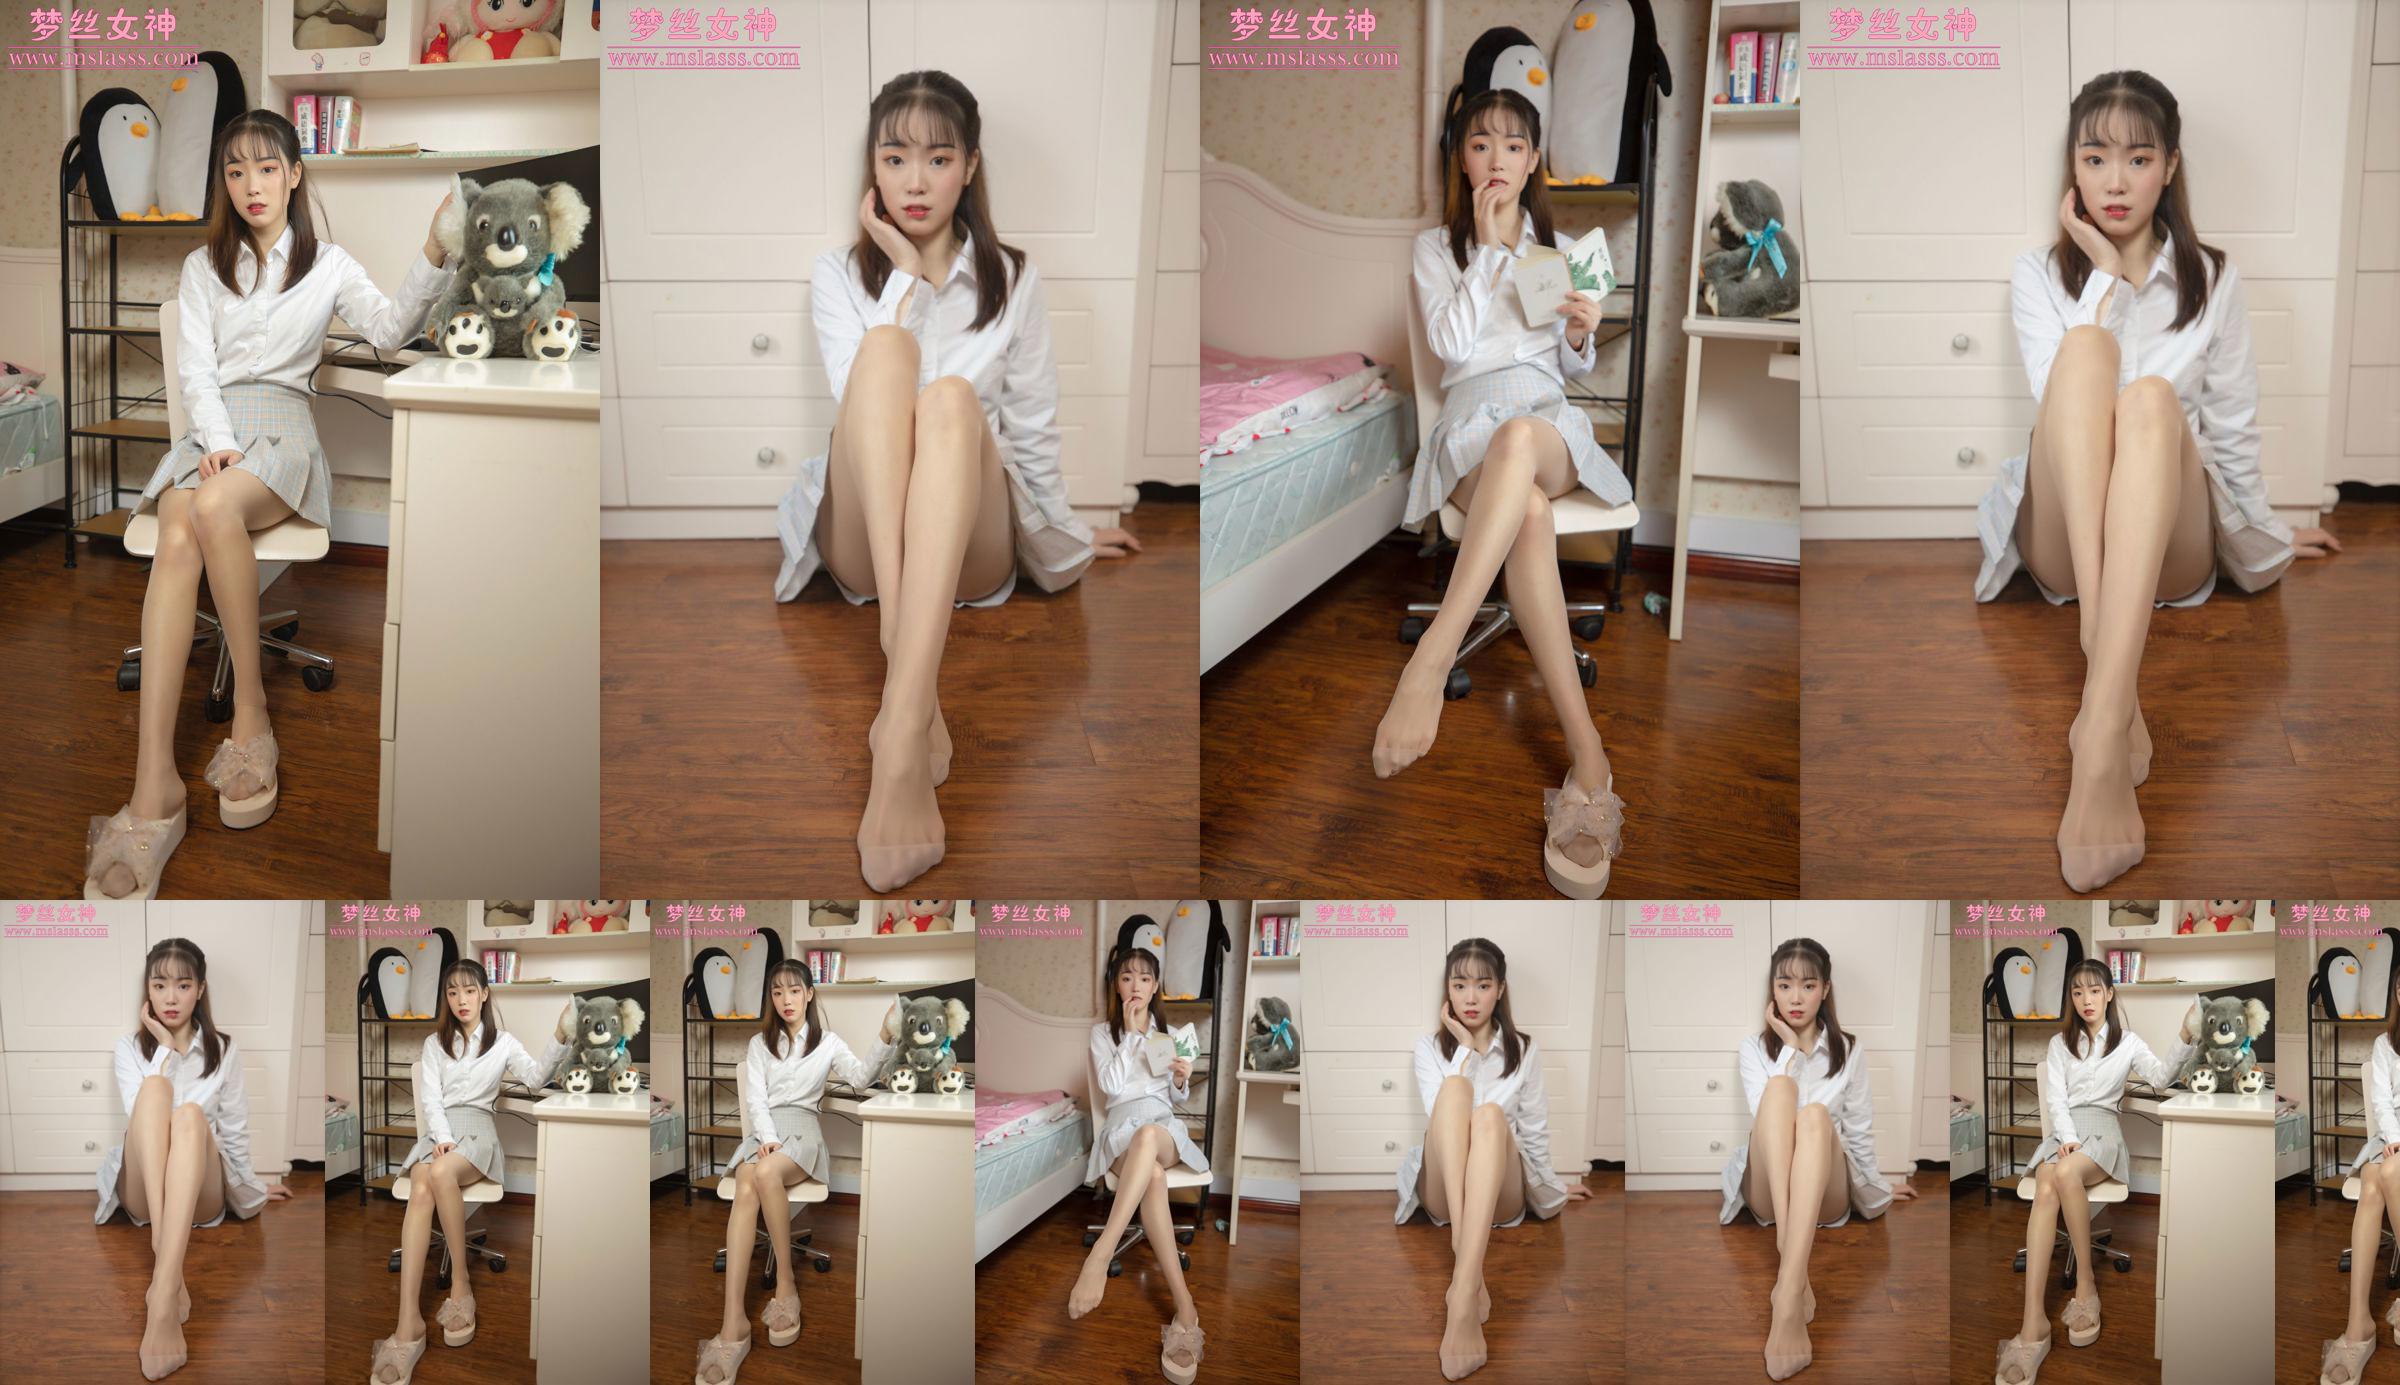 [MSLASS] Zhang Qiying new model goddess No.57ba96 Page 34